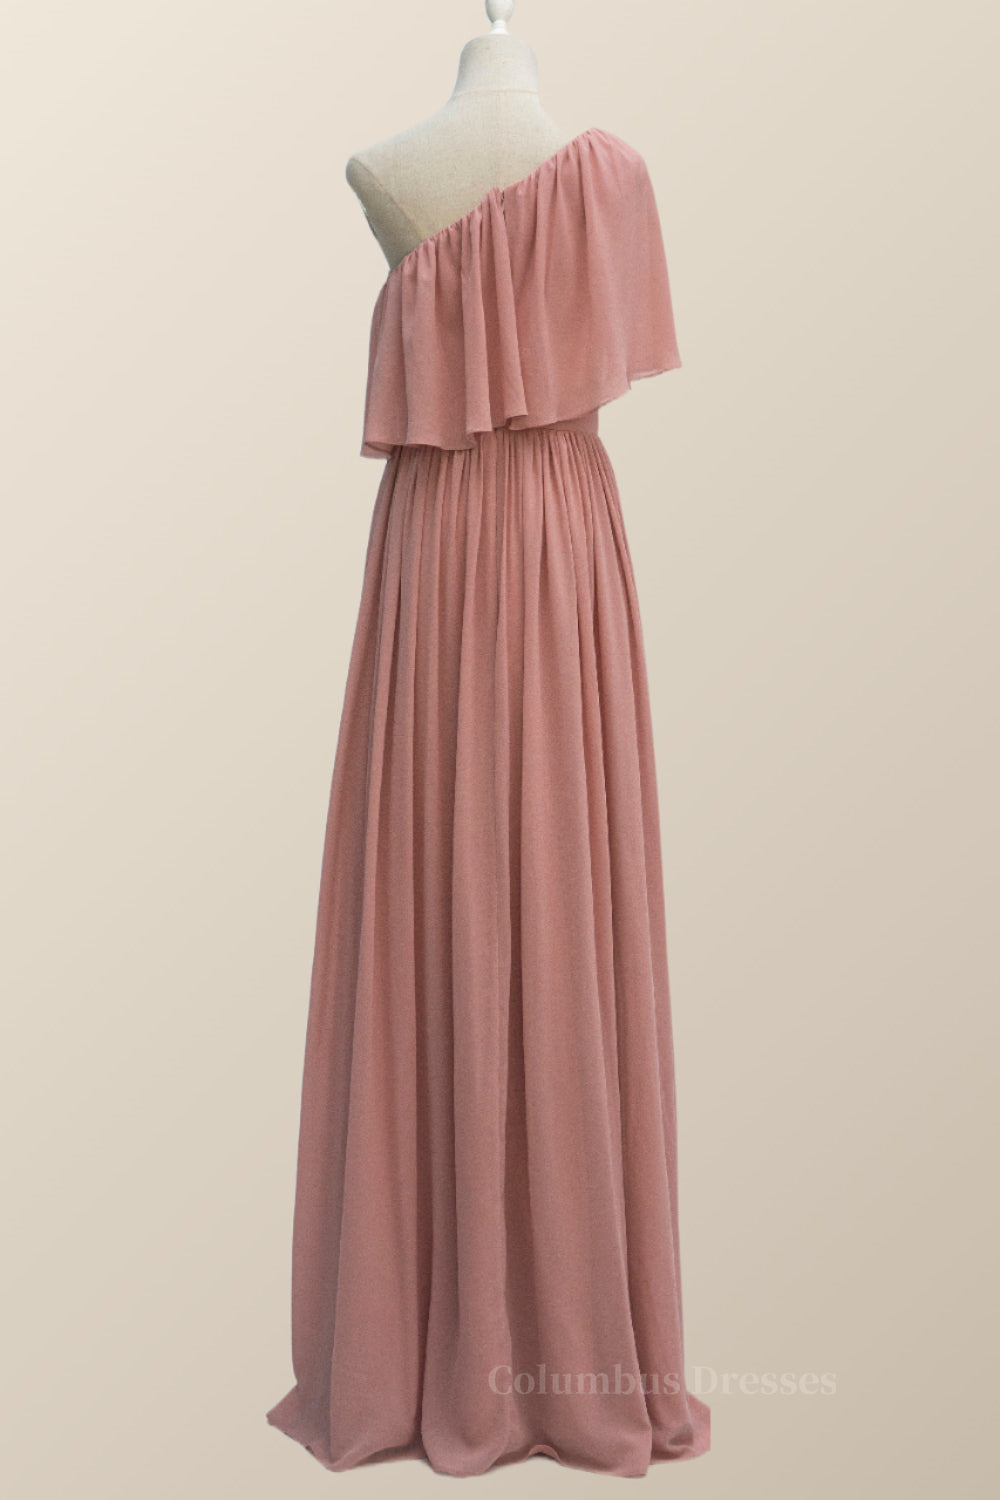 Wedding Photo Ideas, One Shoulder Blush Pink Chiffon Crepe Bridesmaid Dress